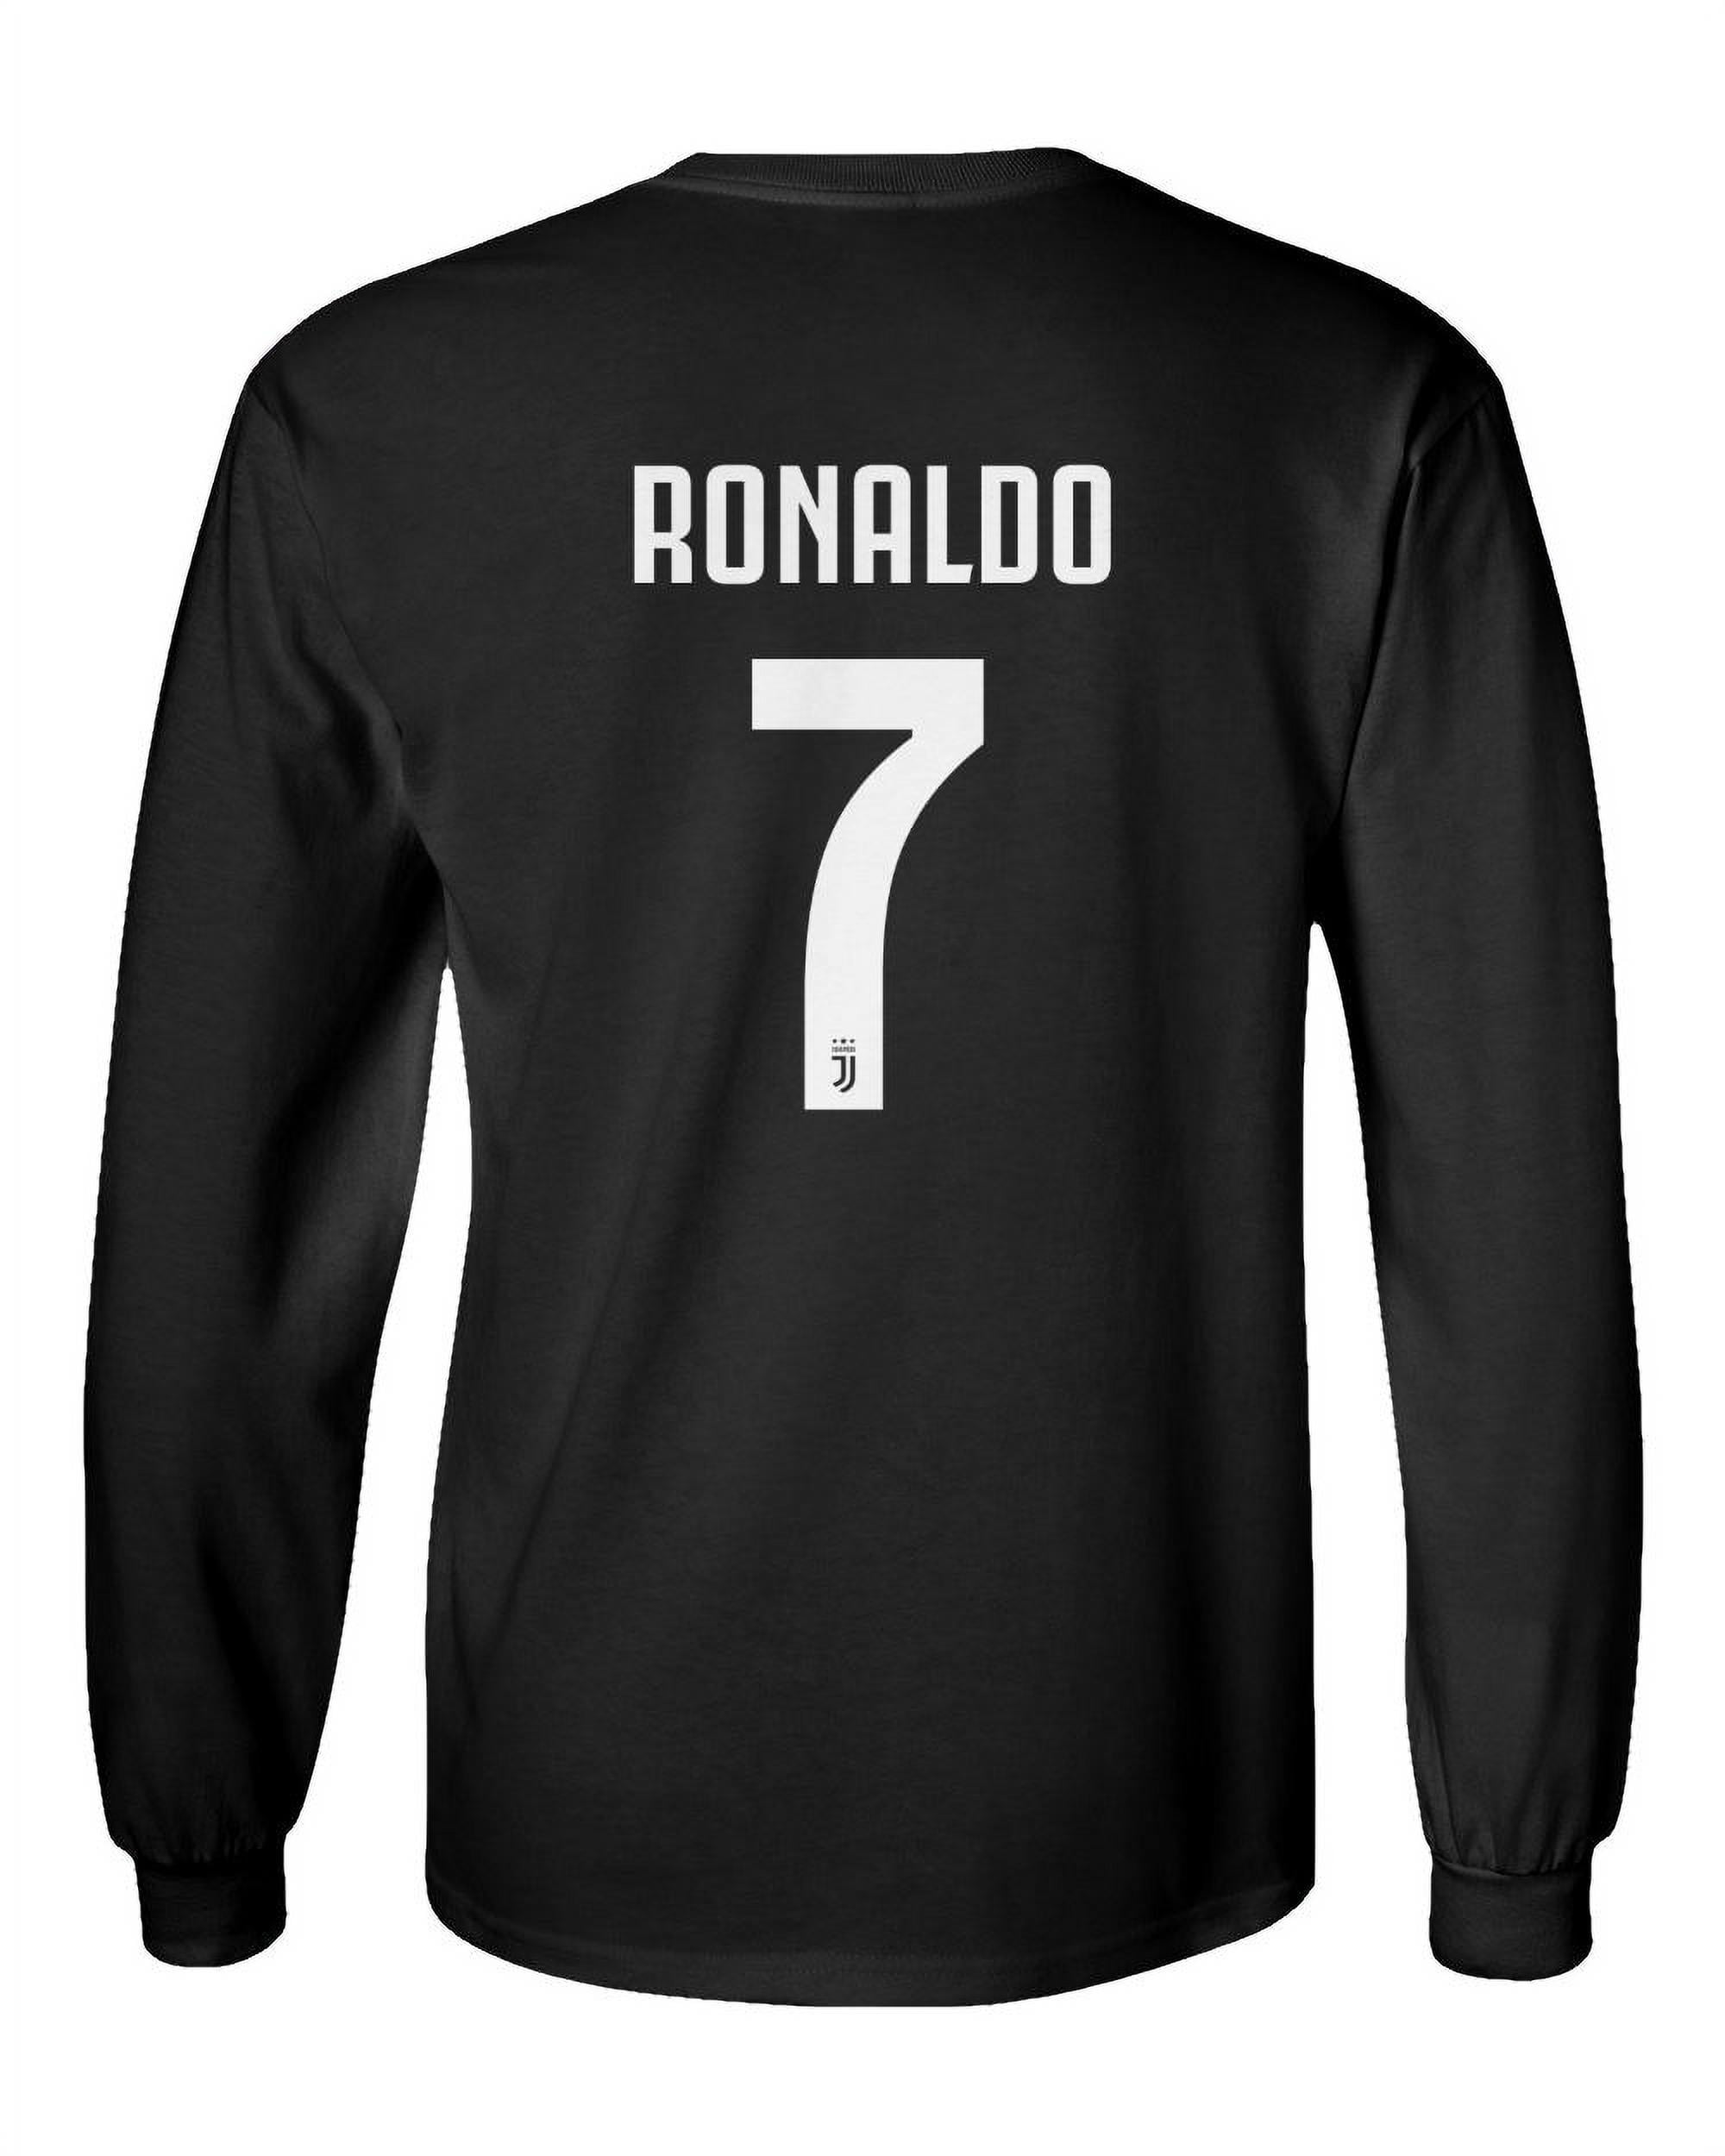 ronaldo soccer jersey